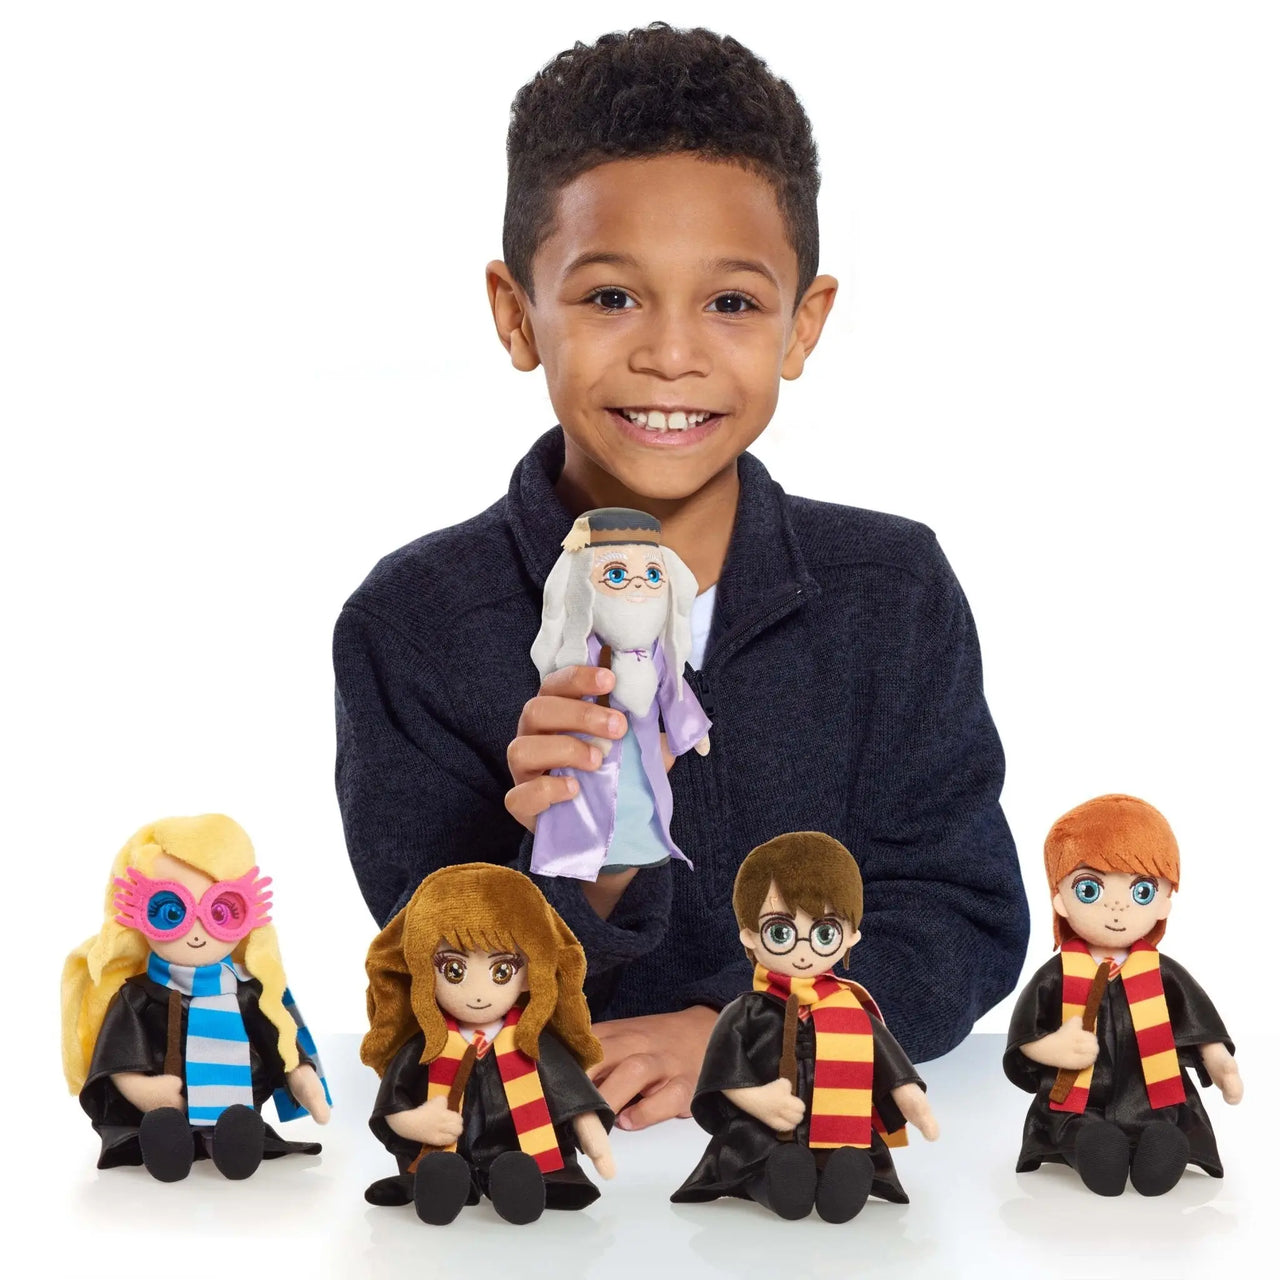 Harry Potter Spell Casting Wizard 8" Plush - Harry Potter Harry Potter